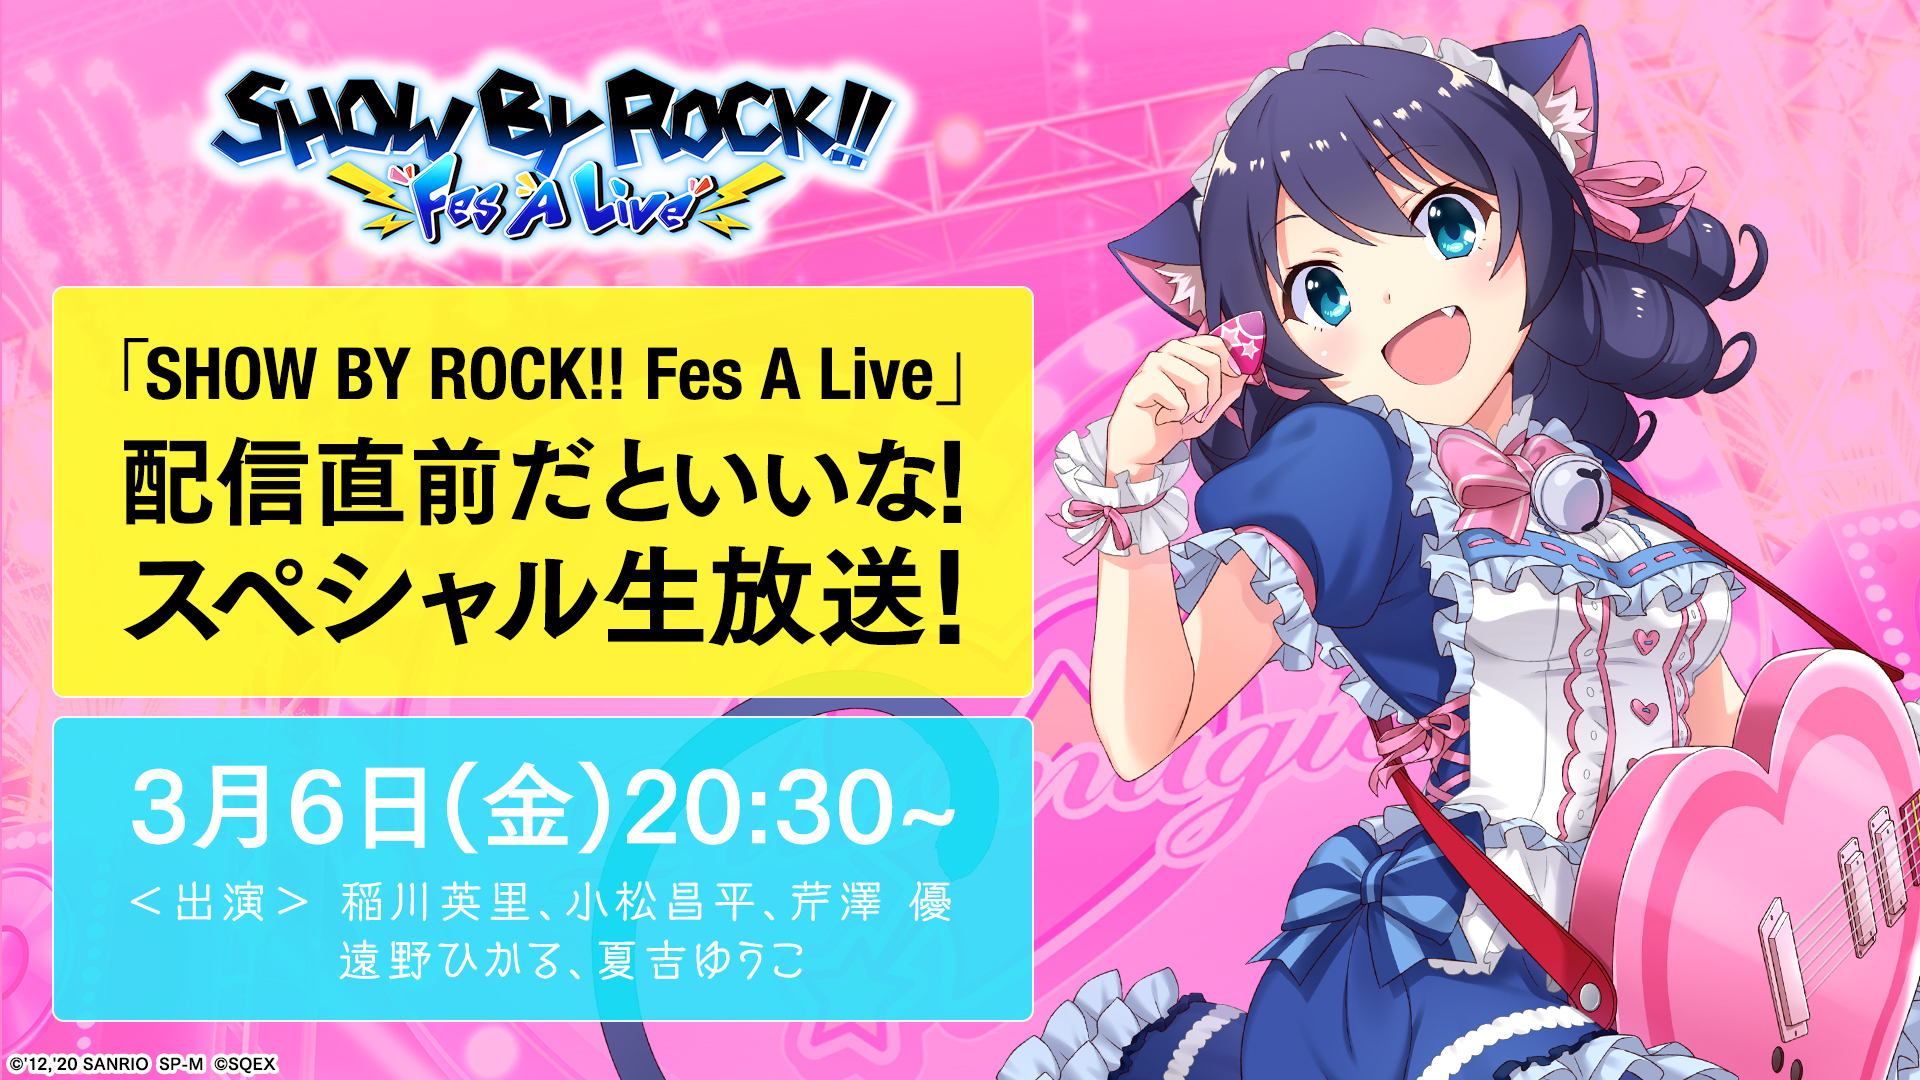 Show By Rock Fes A Live-Reijingsignal-Rararin